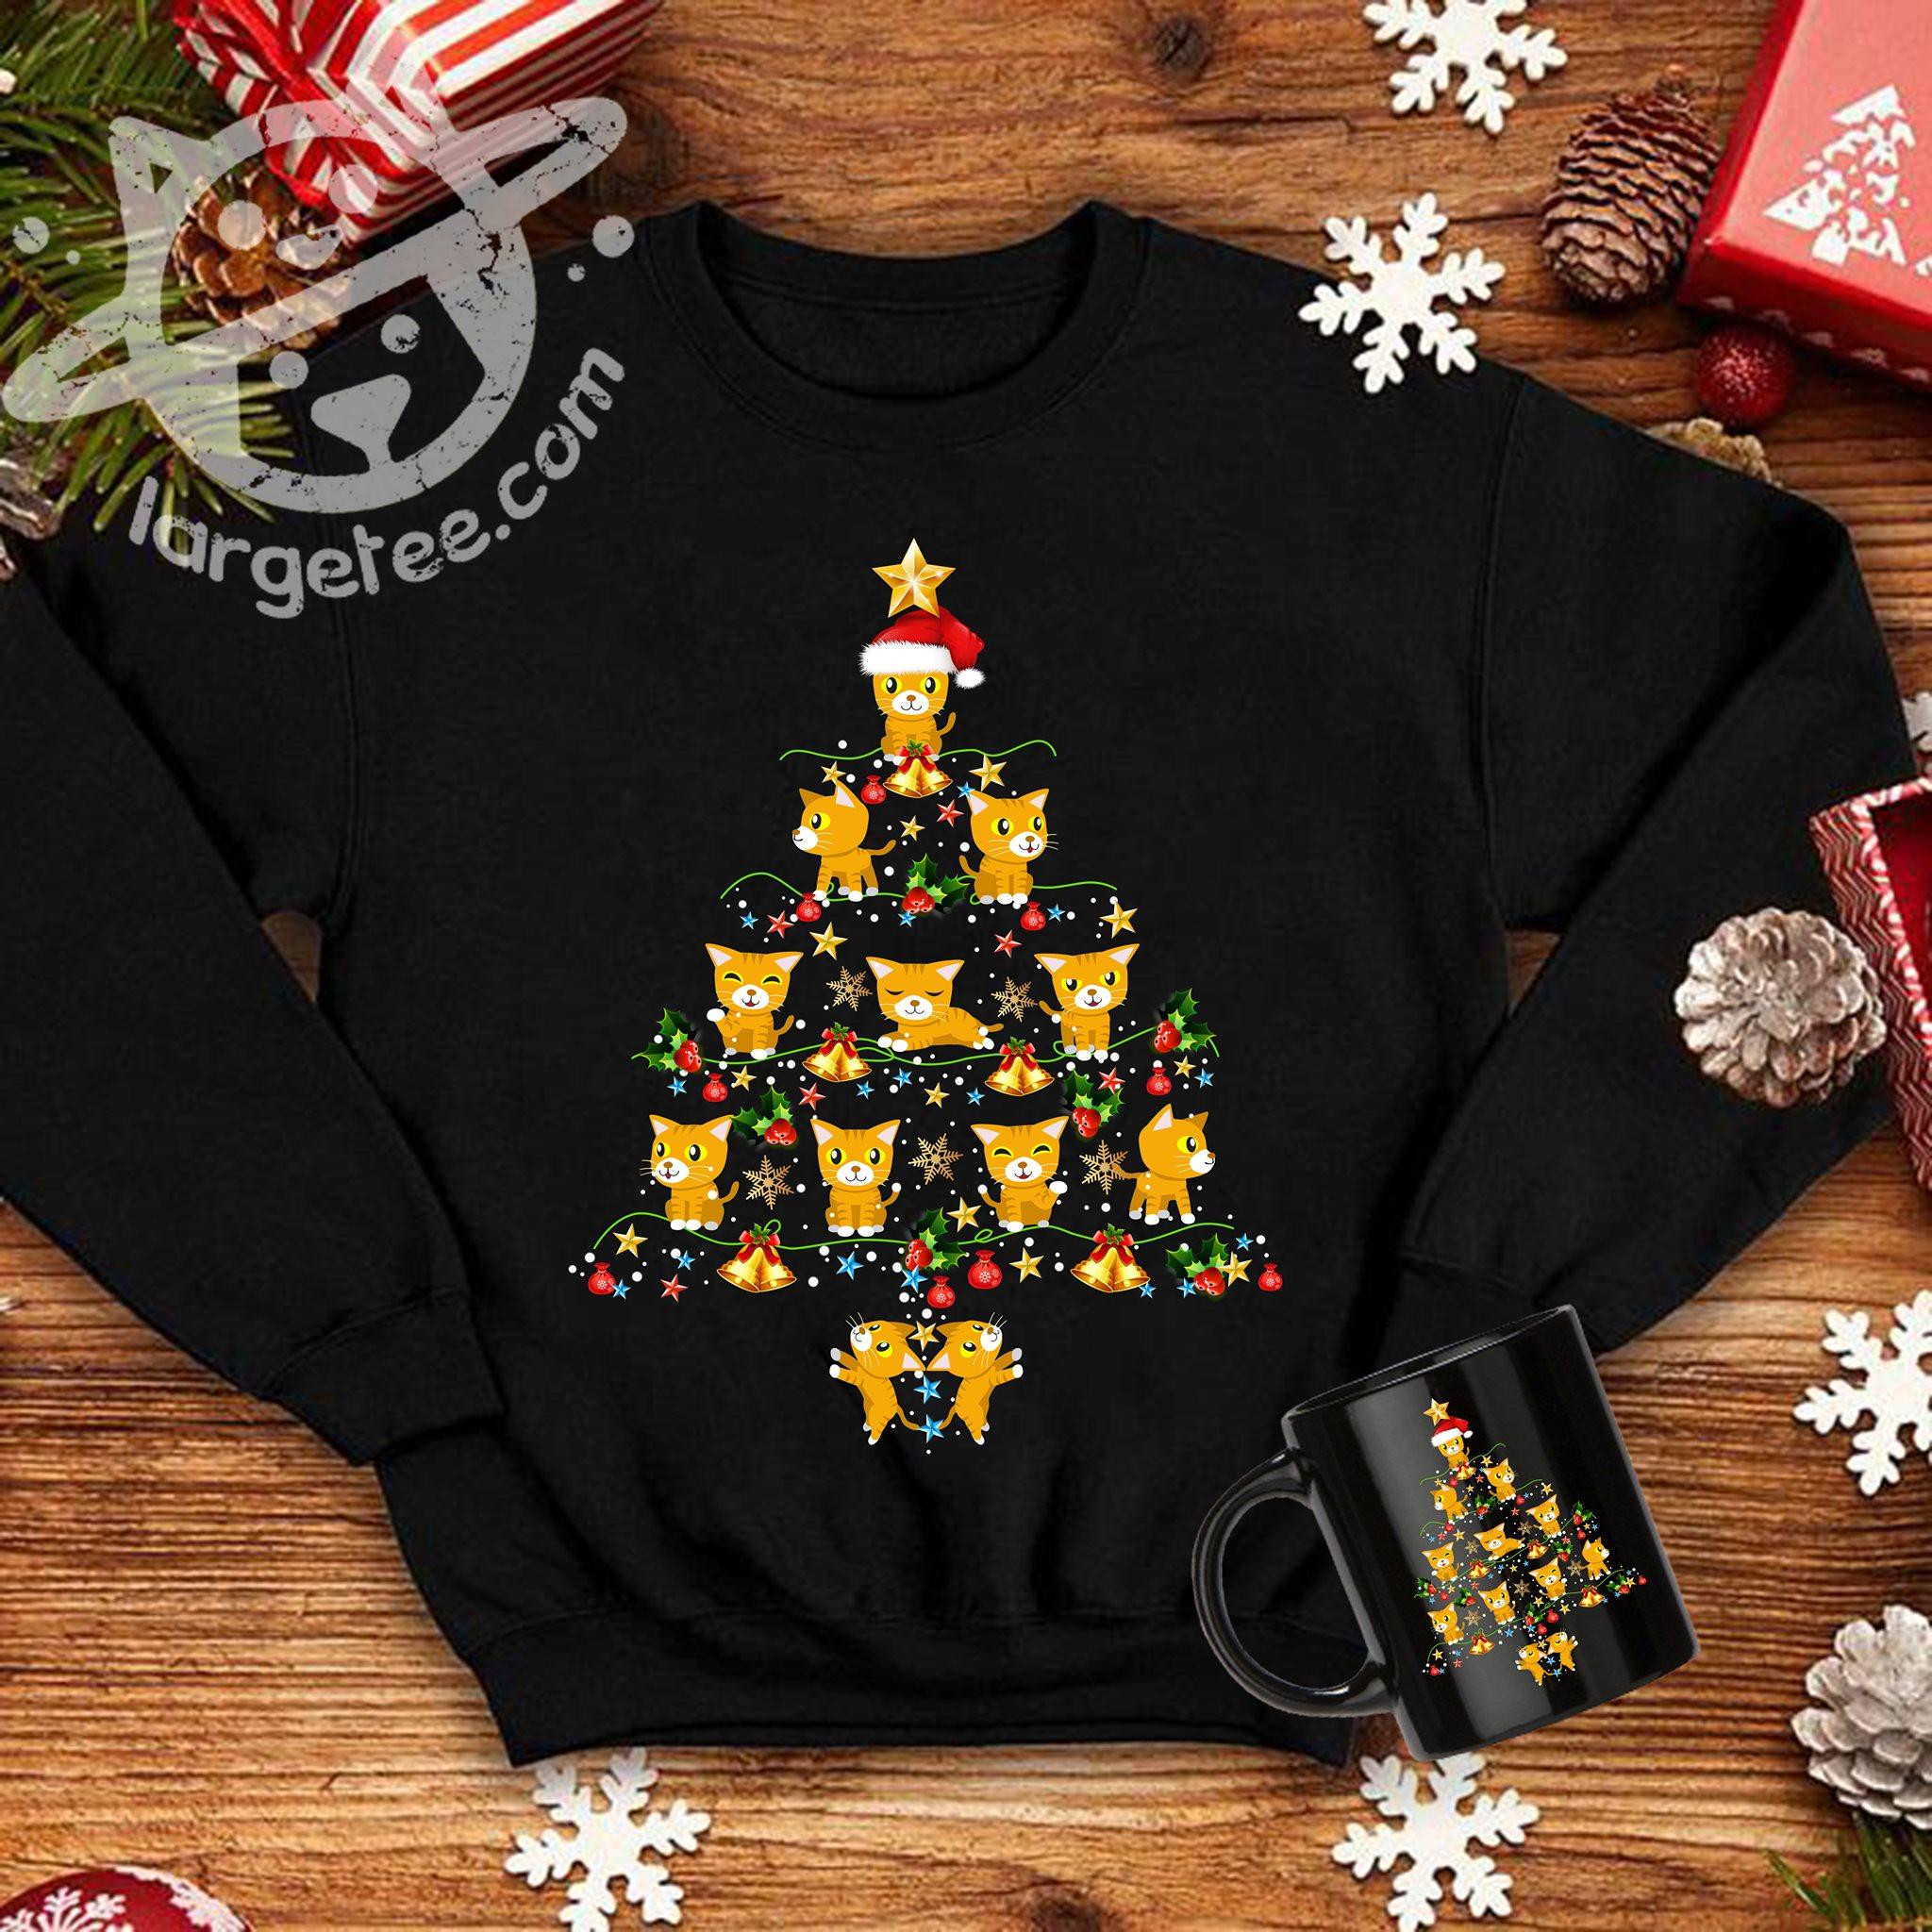 Christmas Tree Cat, Cat Graphic T-shirt, Merry Christmas